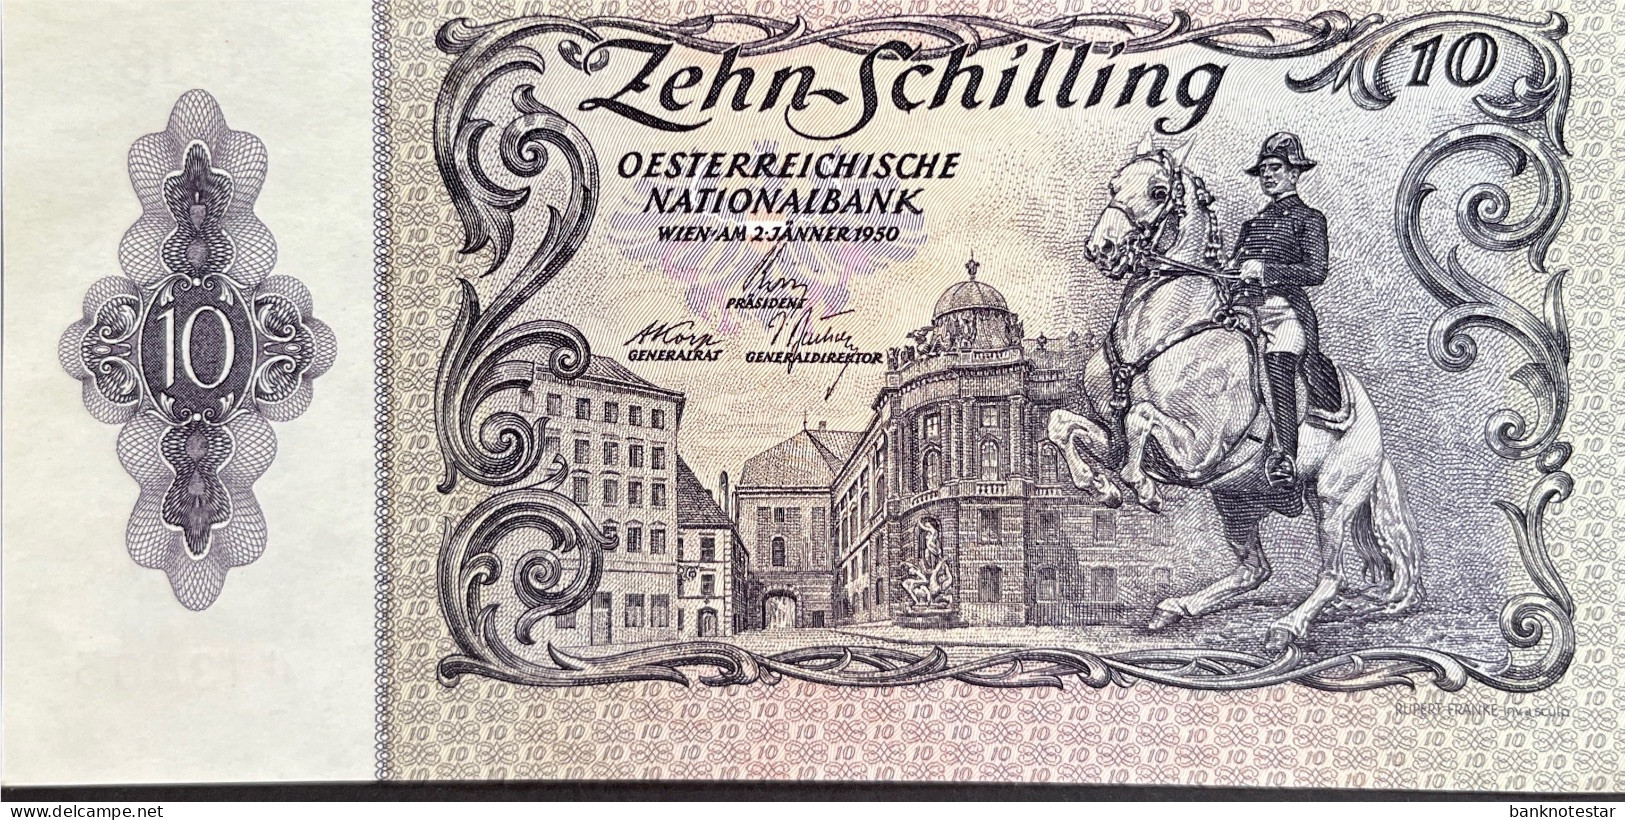 Austria 10 Schilling, P-128 (02.01.1950) - UNC - RARE - Autriche